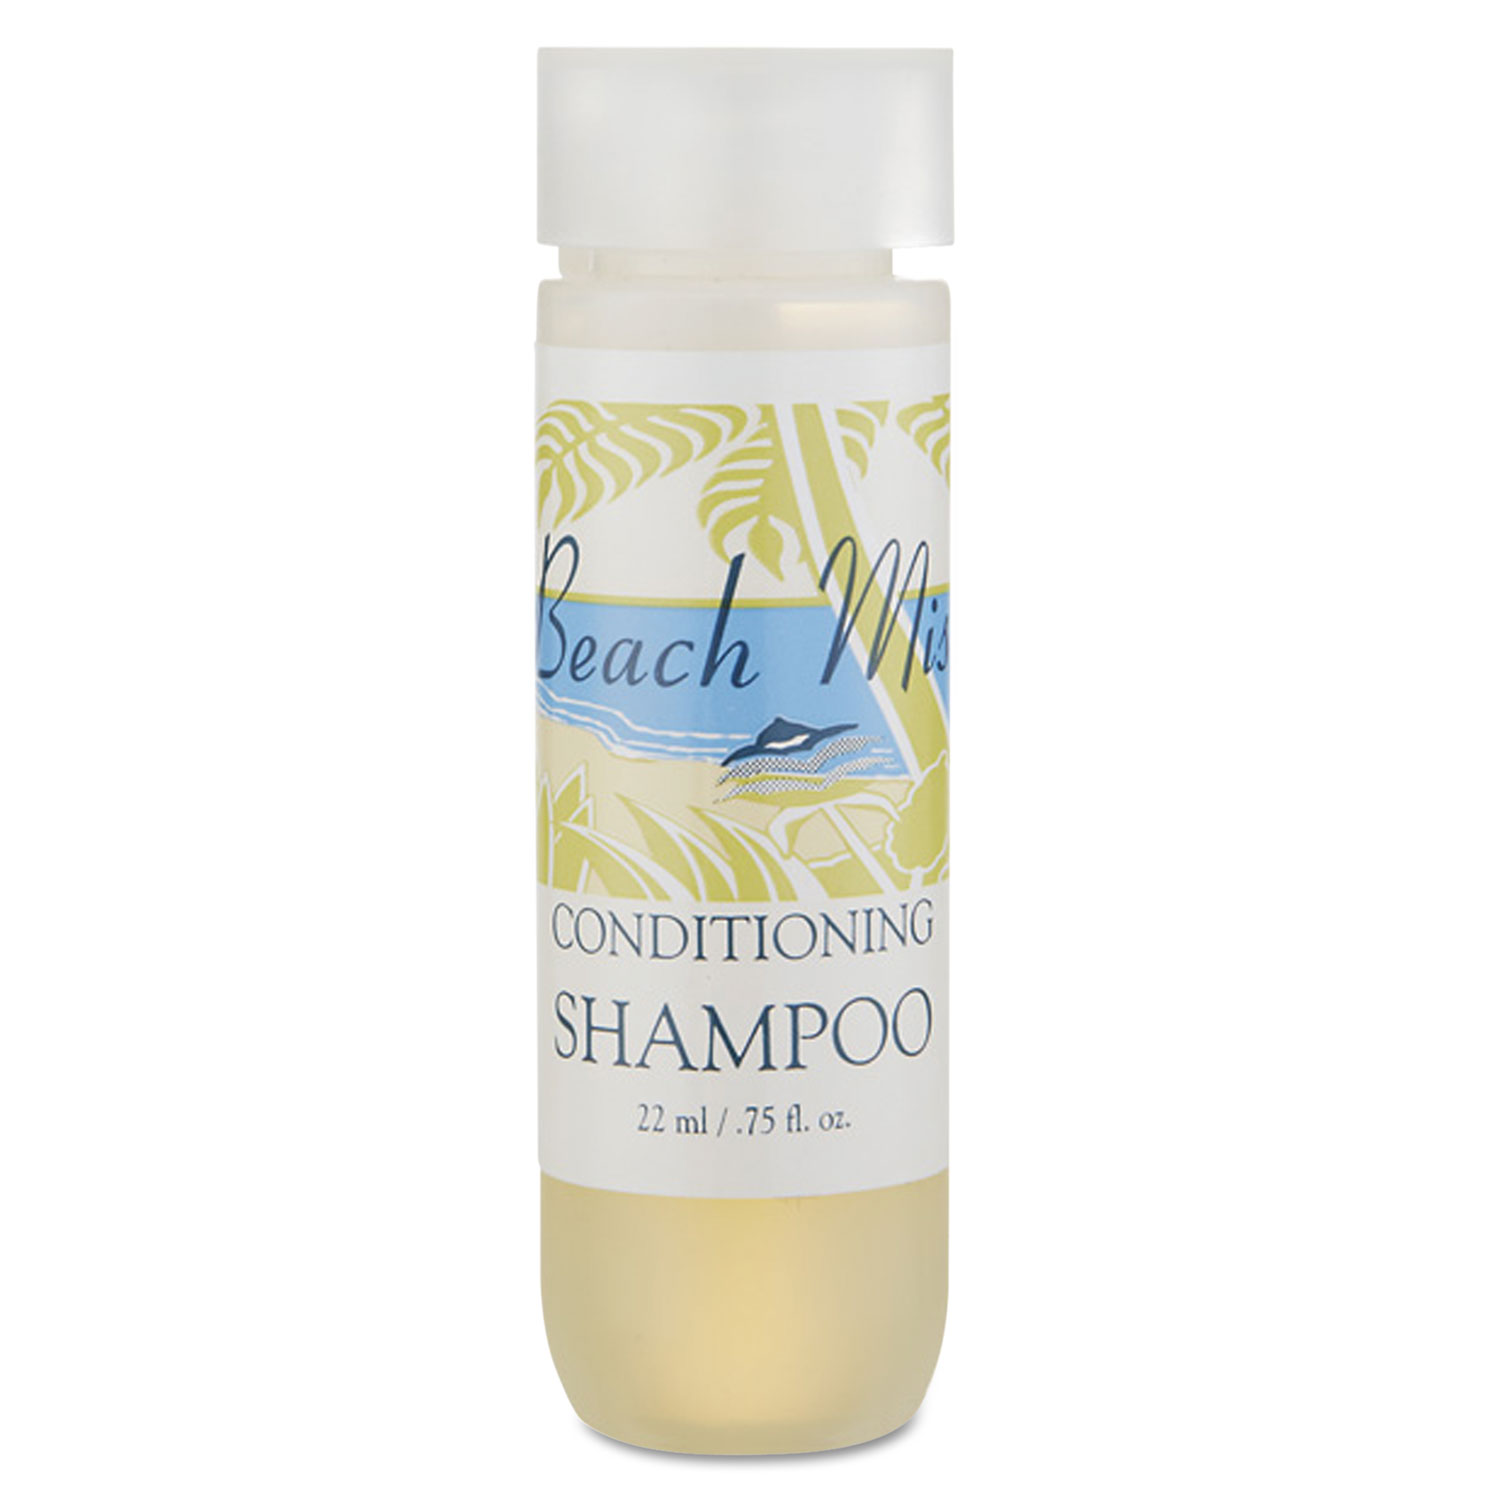 Shampoo, 0.75 oz Bottle, 288/Carton